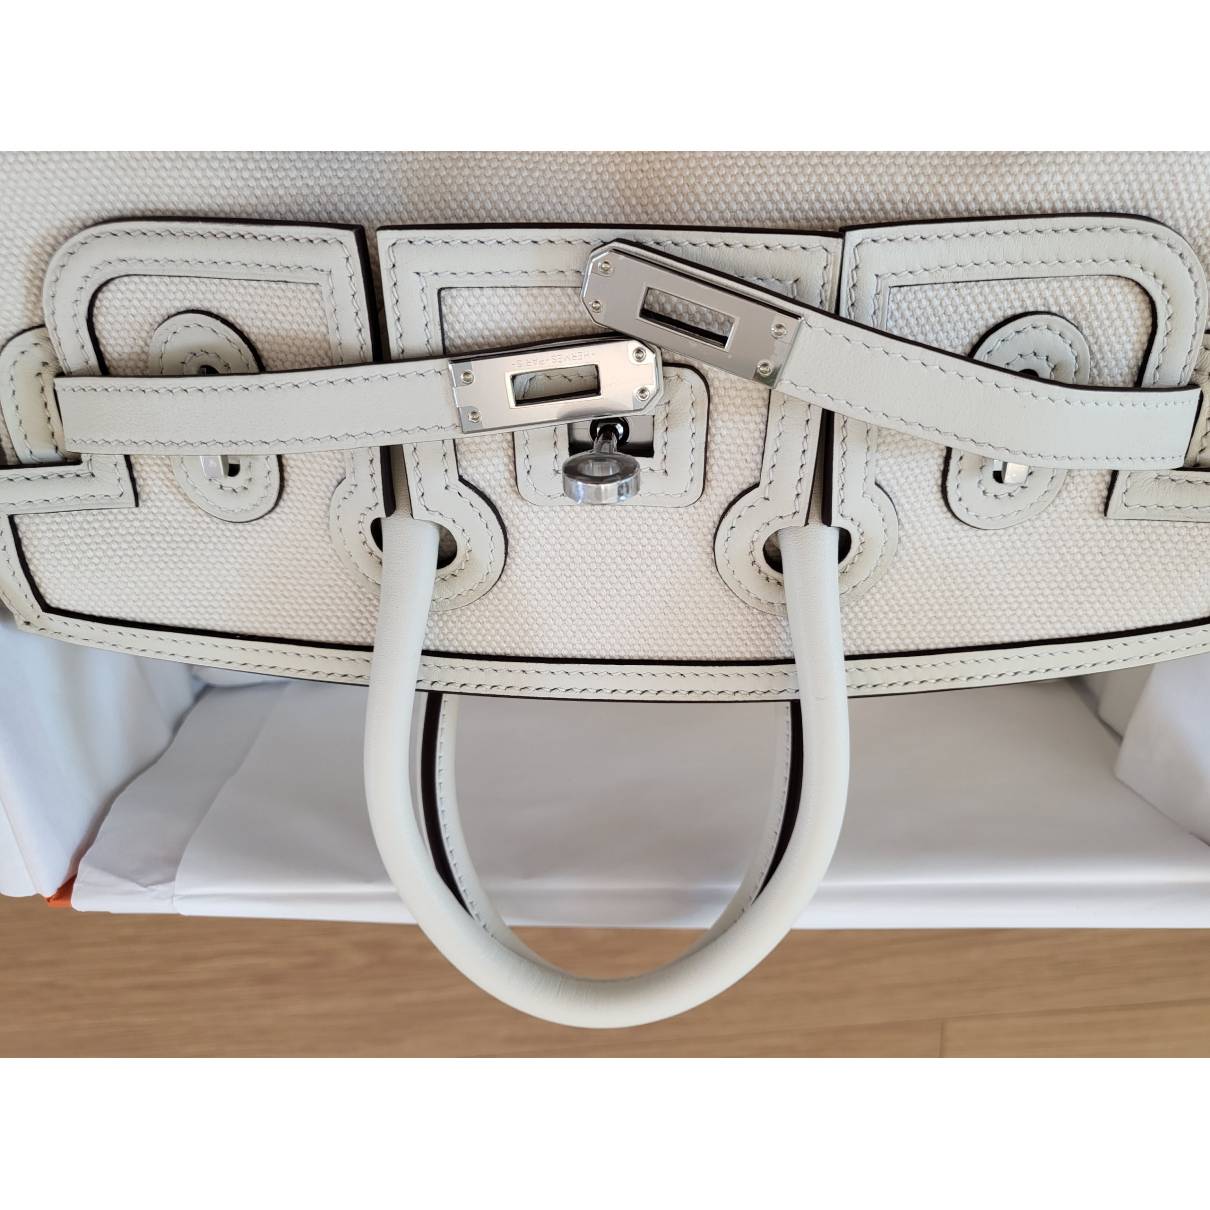 Hermès - Authenticated Birkin Cargo Handbag - Cloth White Plain for Women, Very Good Condition